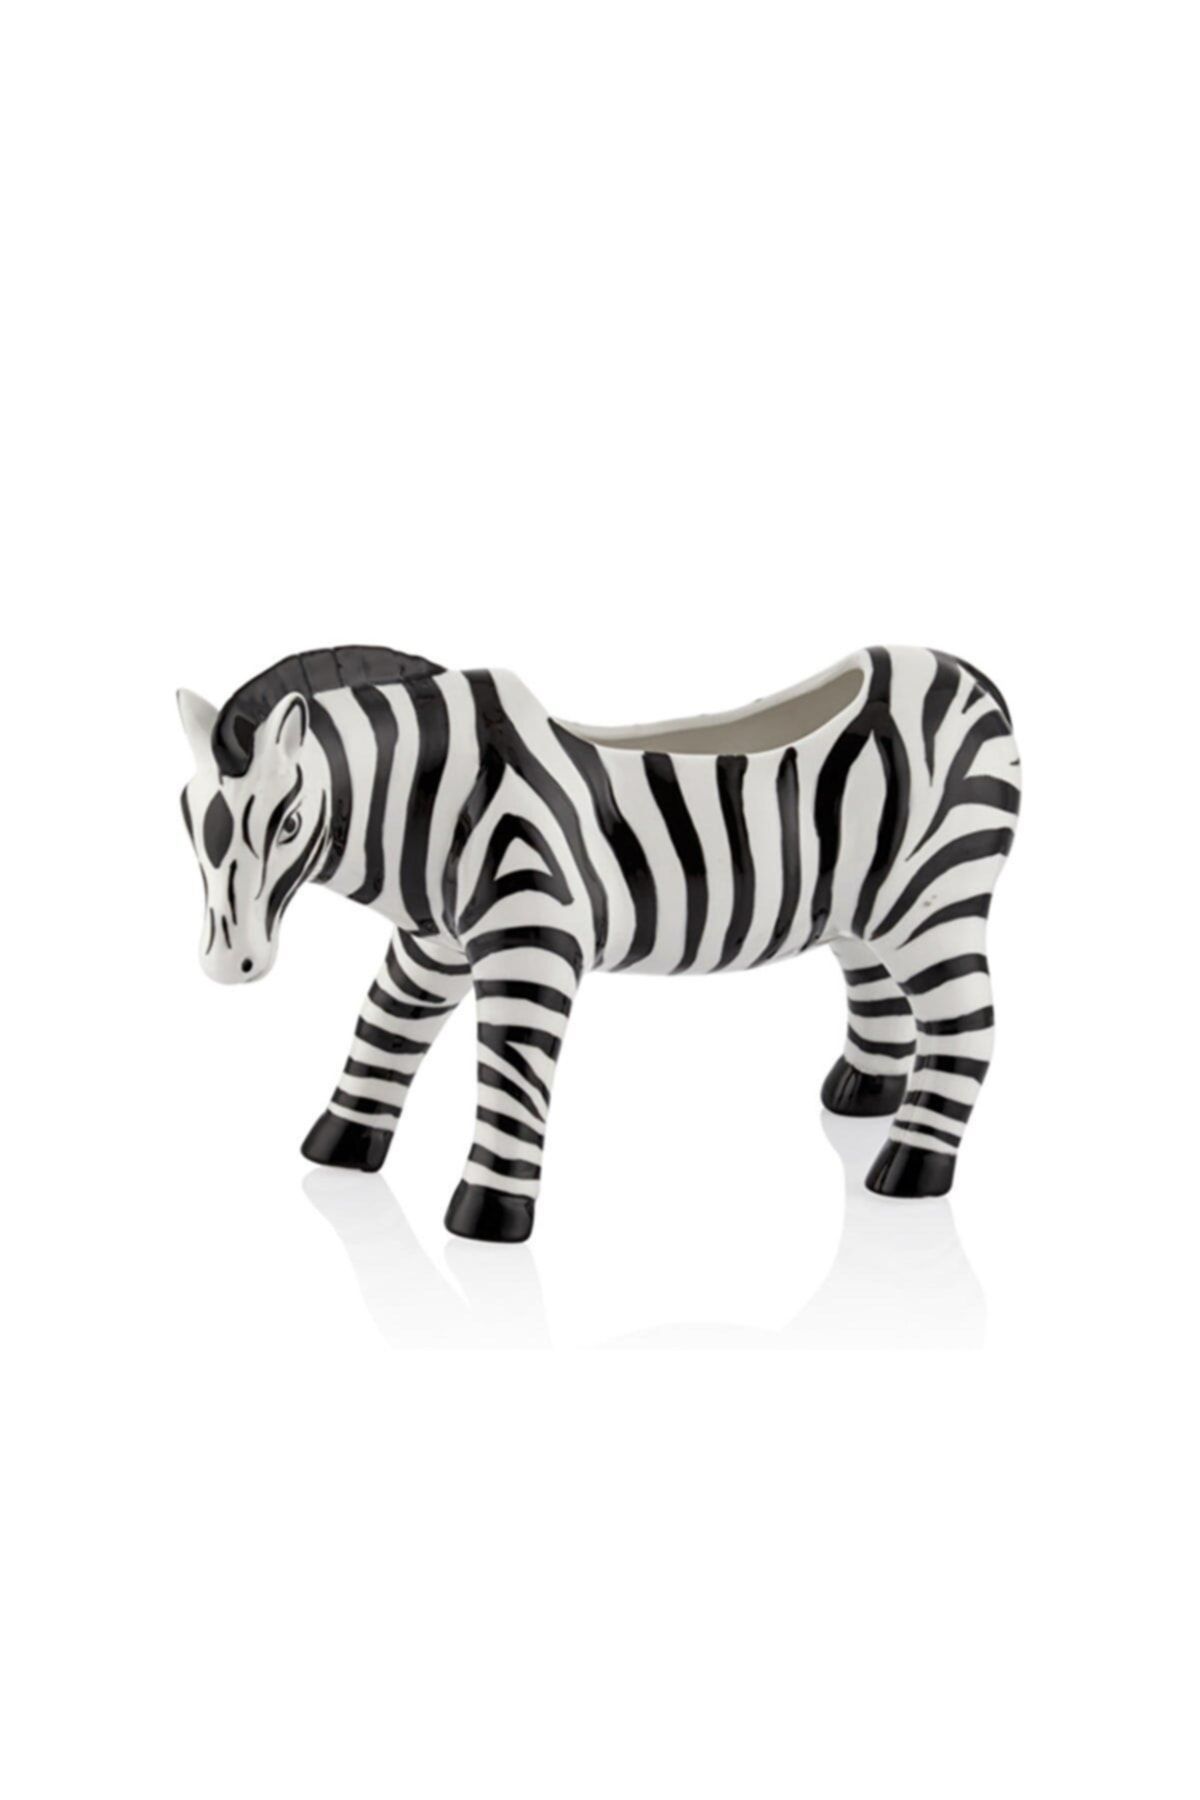 LAMEDORE Dekoratif Aksesuar Lou Zebra Saksı Küçük Boy 25x10x16 Cm 1jb-20d60